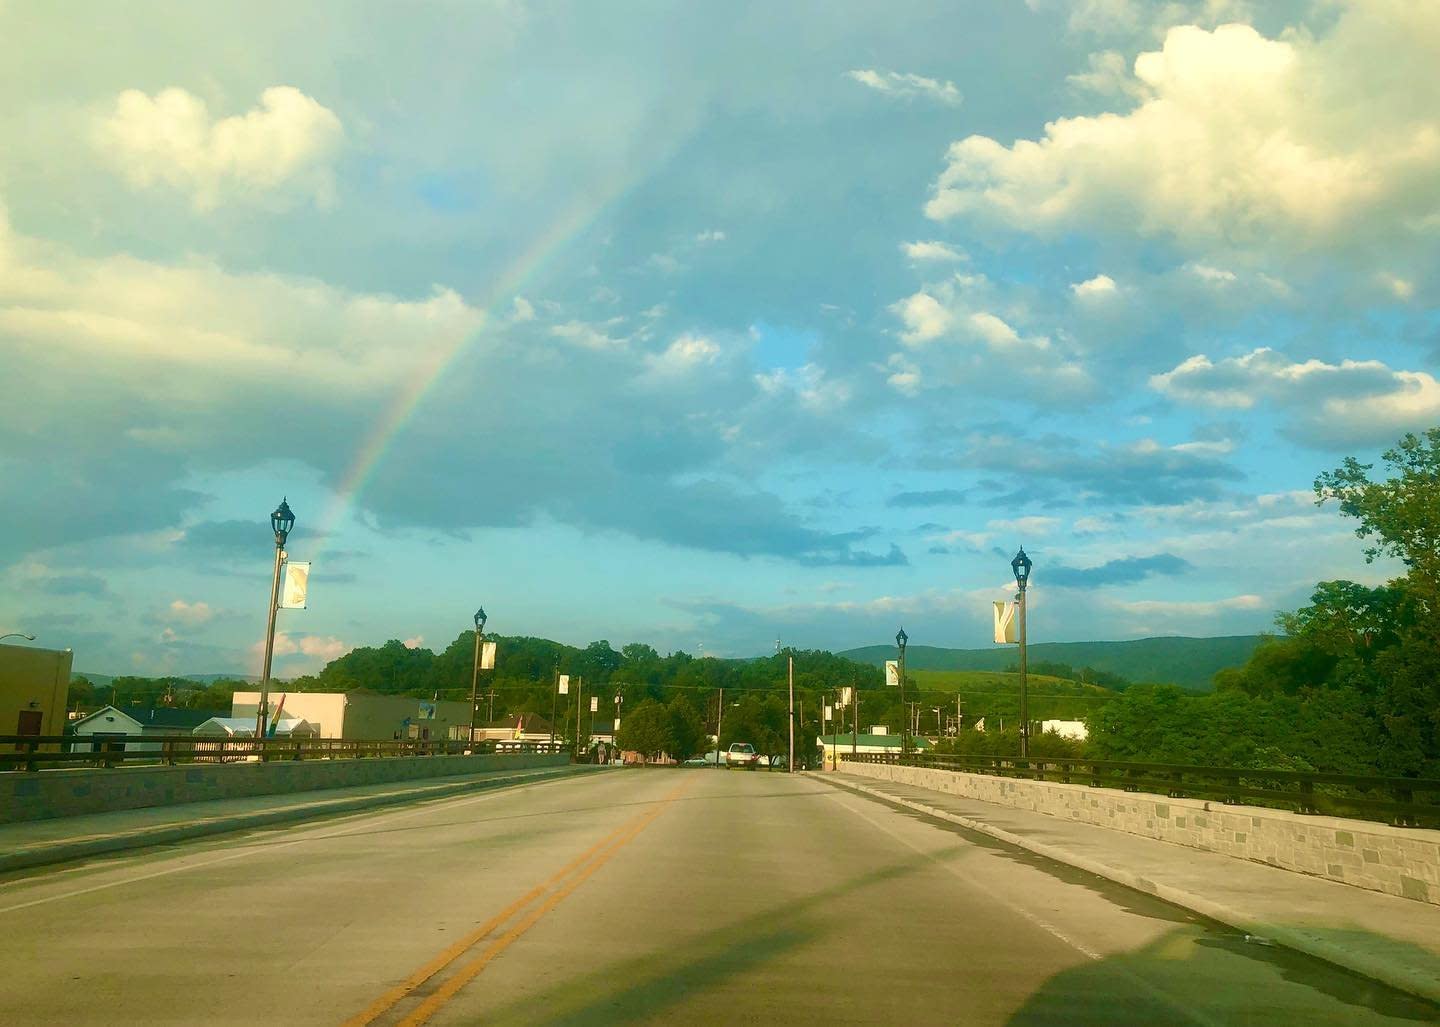 Photo by user alphaema, caption reads #rainbow #visitwaynesboro #blueridgemountains #blueridgemoments #loveva #sharewhatyoulove